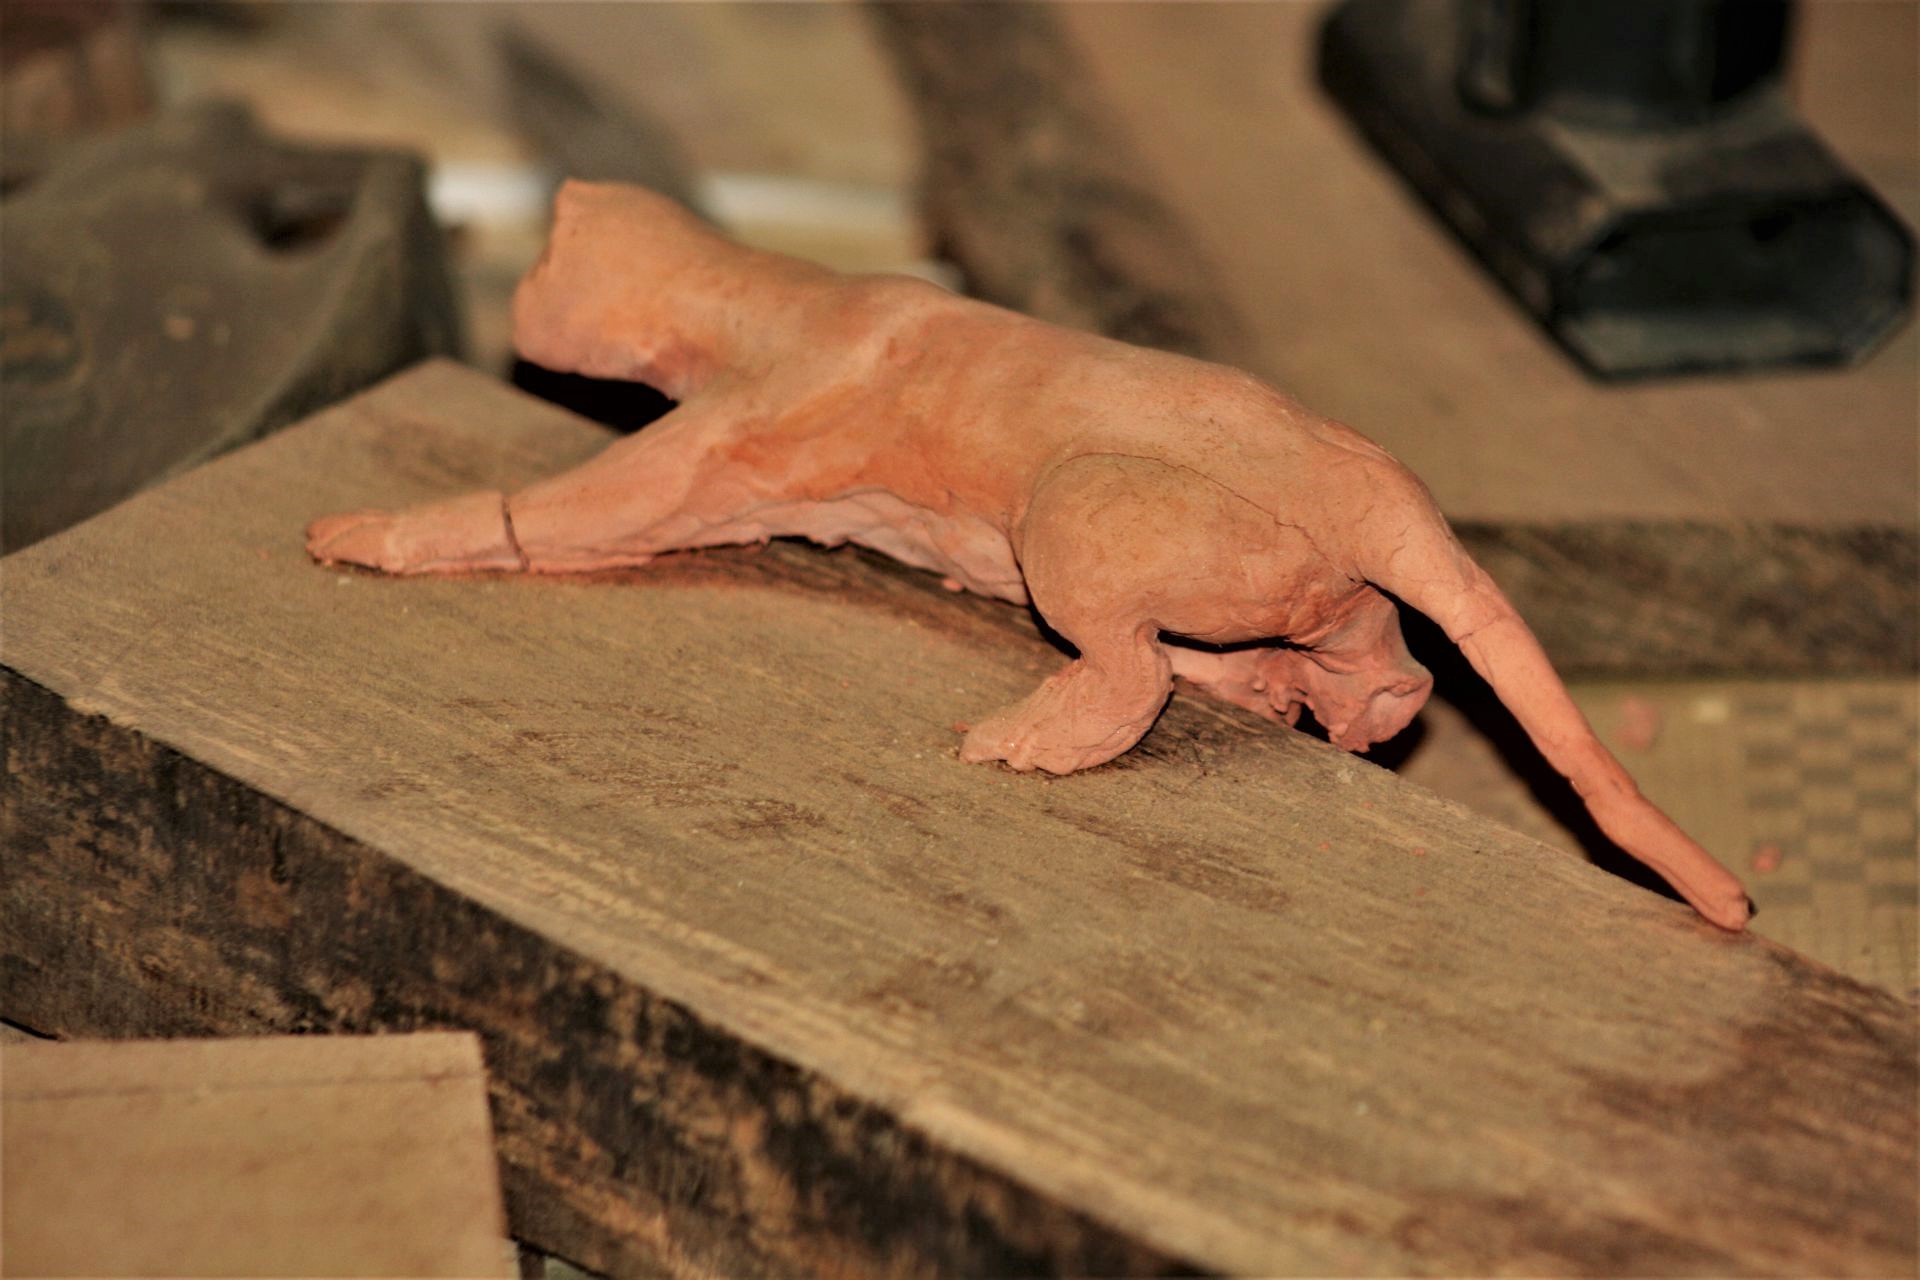 shaping wood cat model unique handmade sanisio artist design artisan custom made